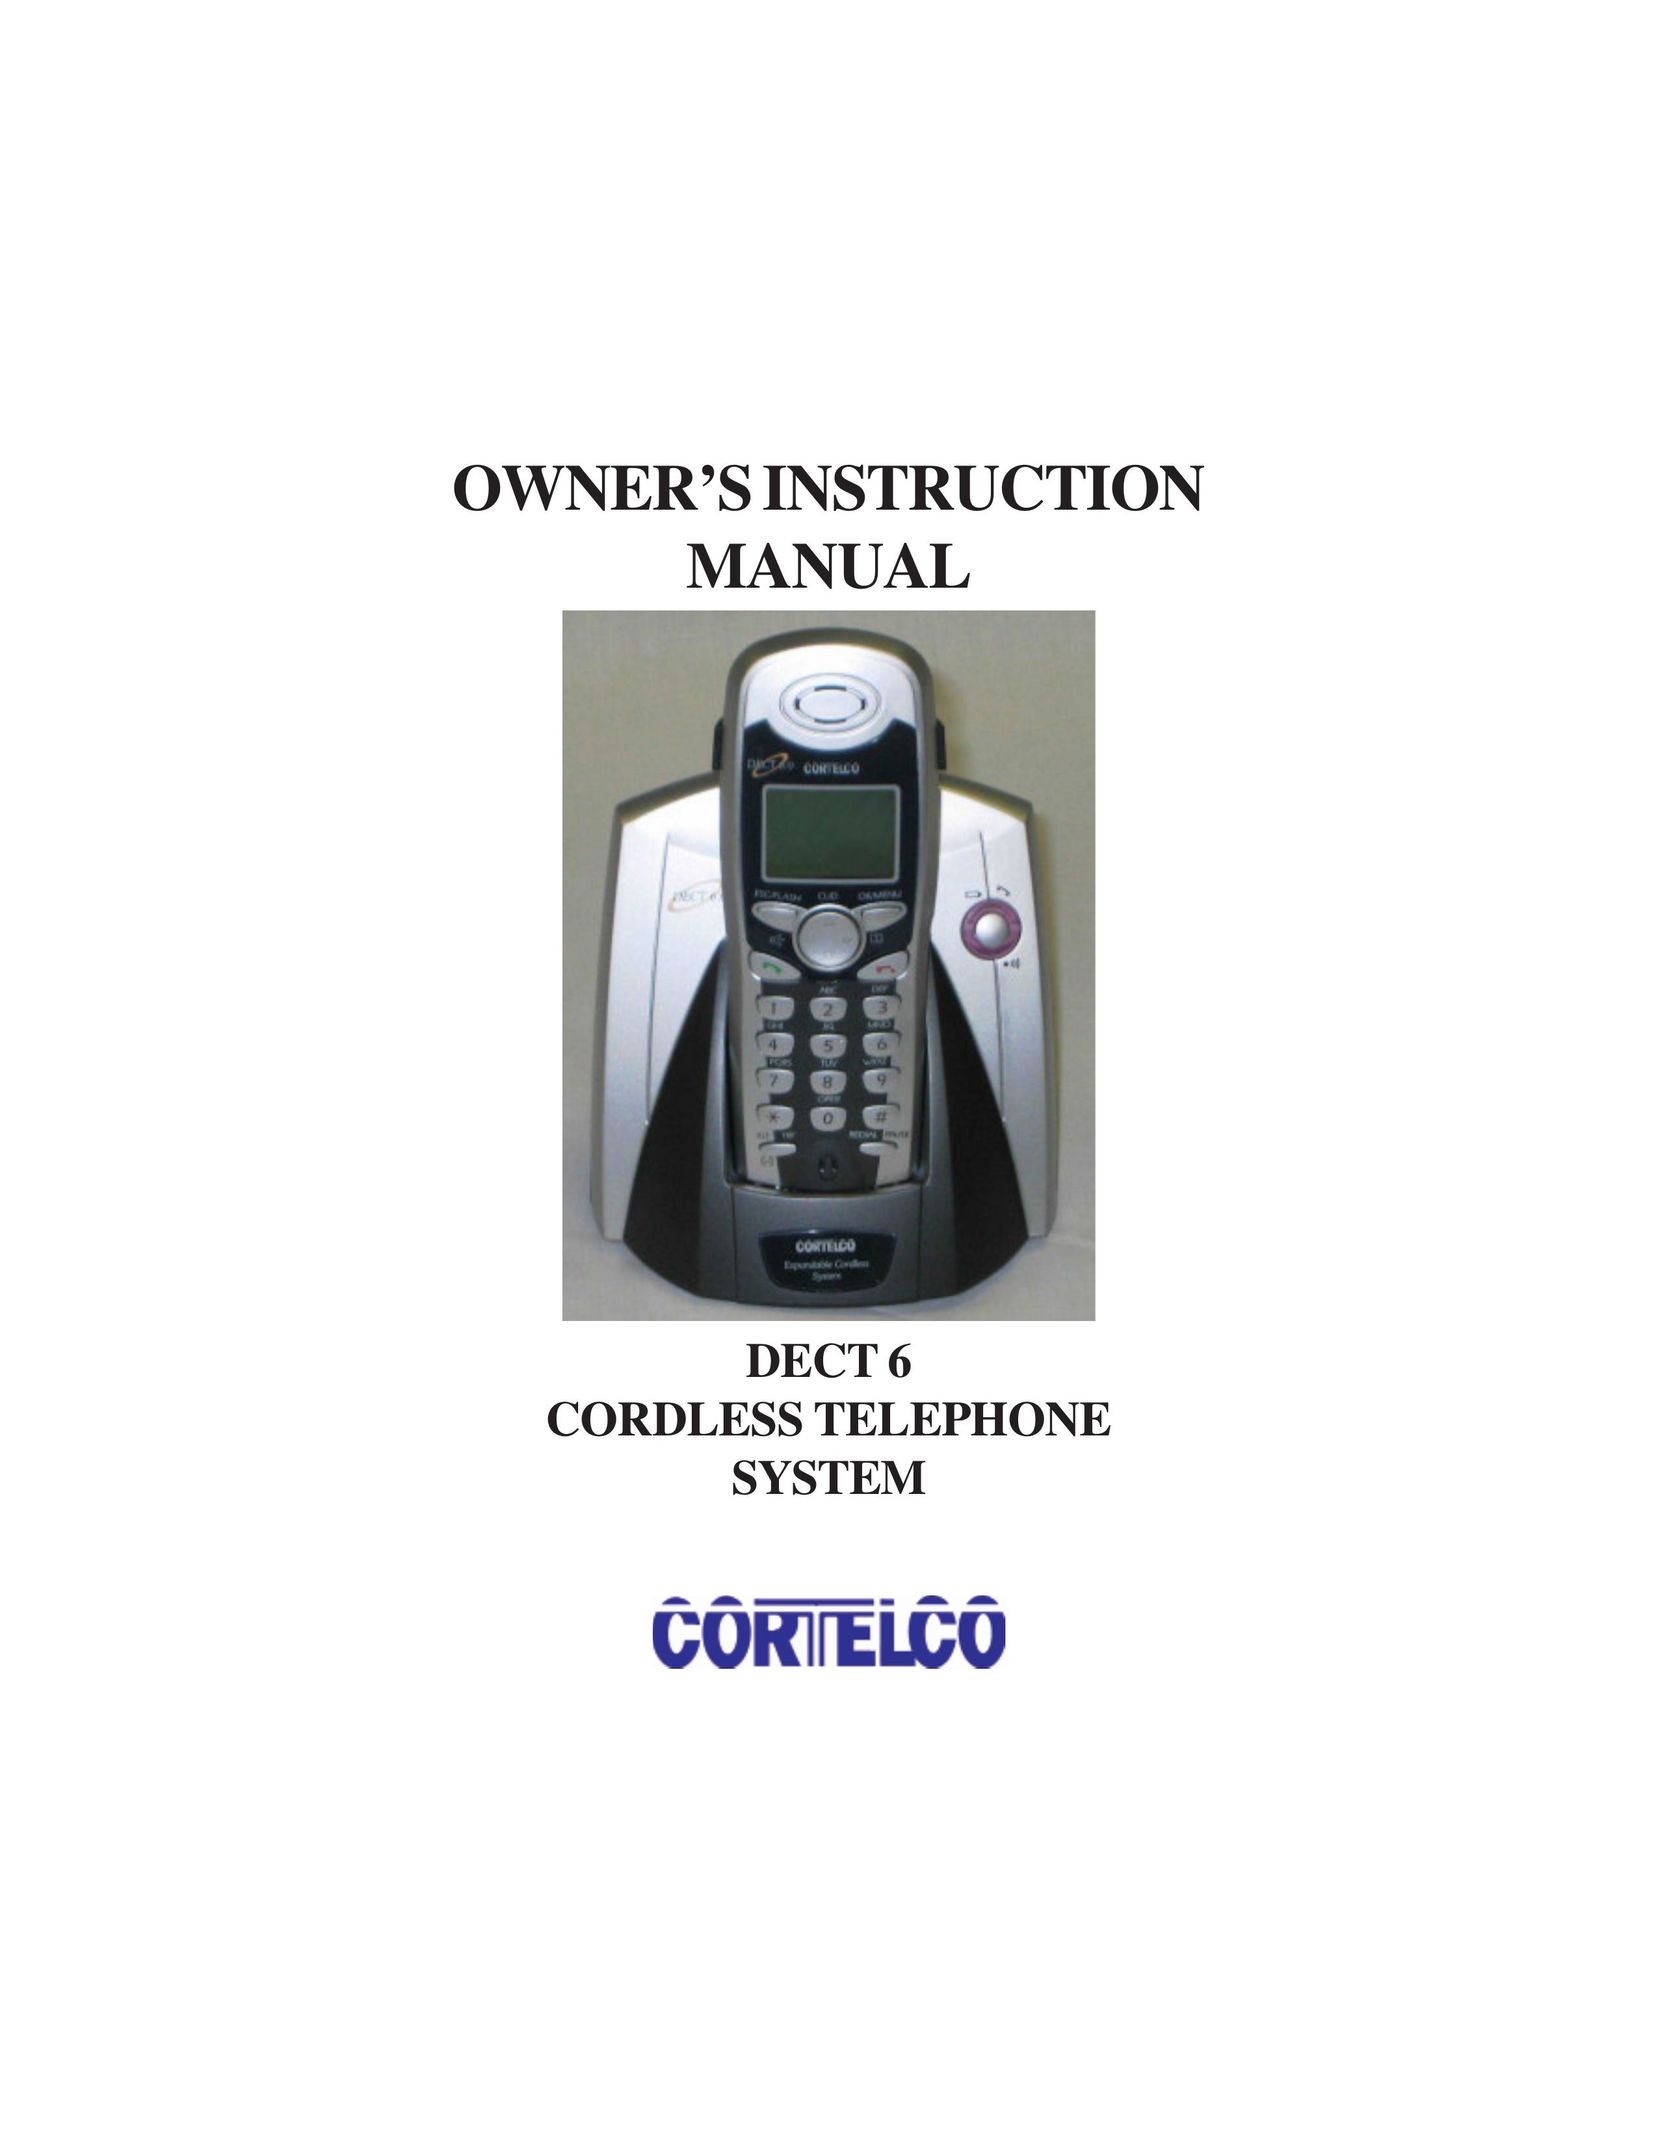 Cortelco DECT 6 Cordless Telephone User Manual